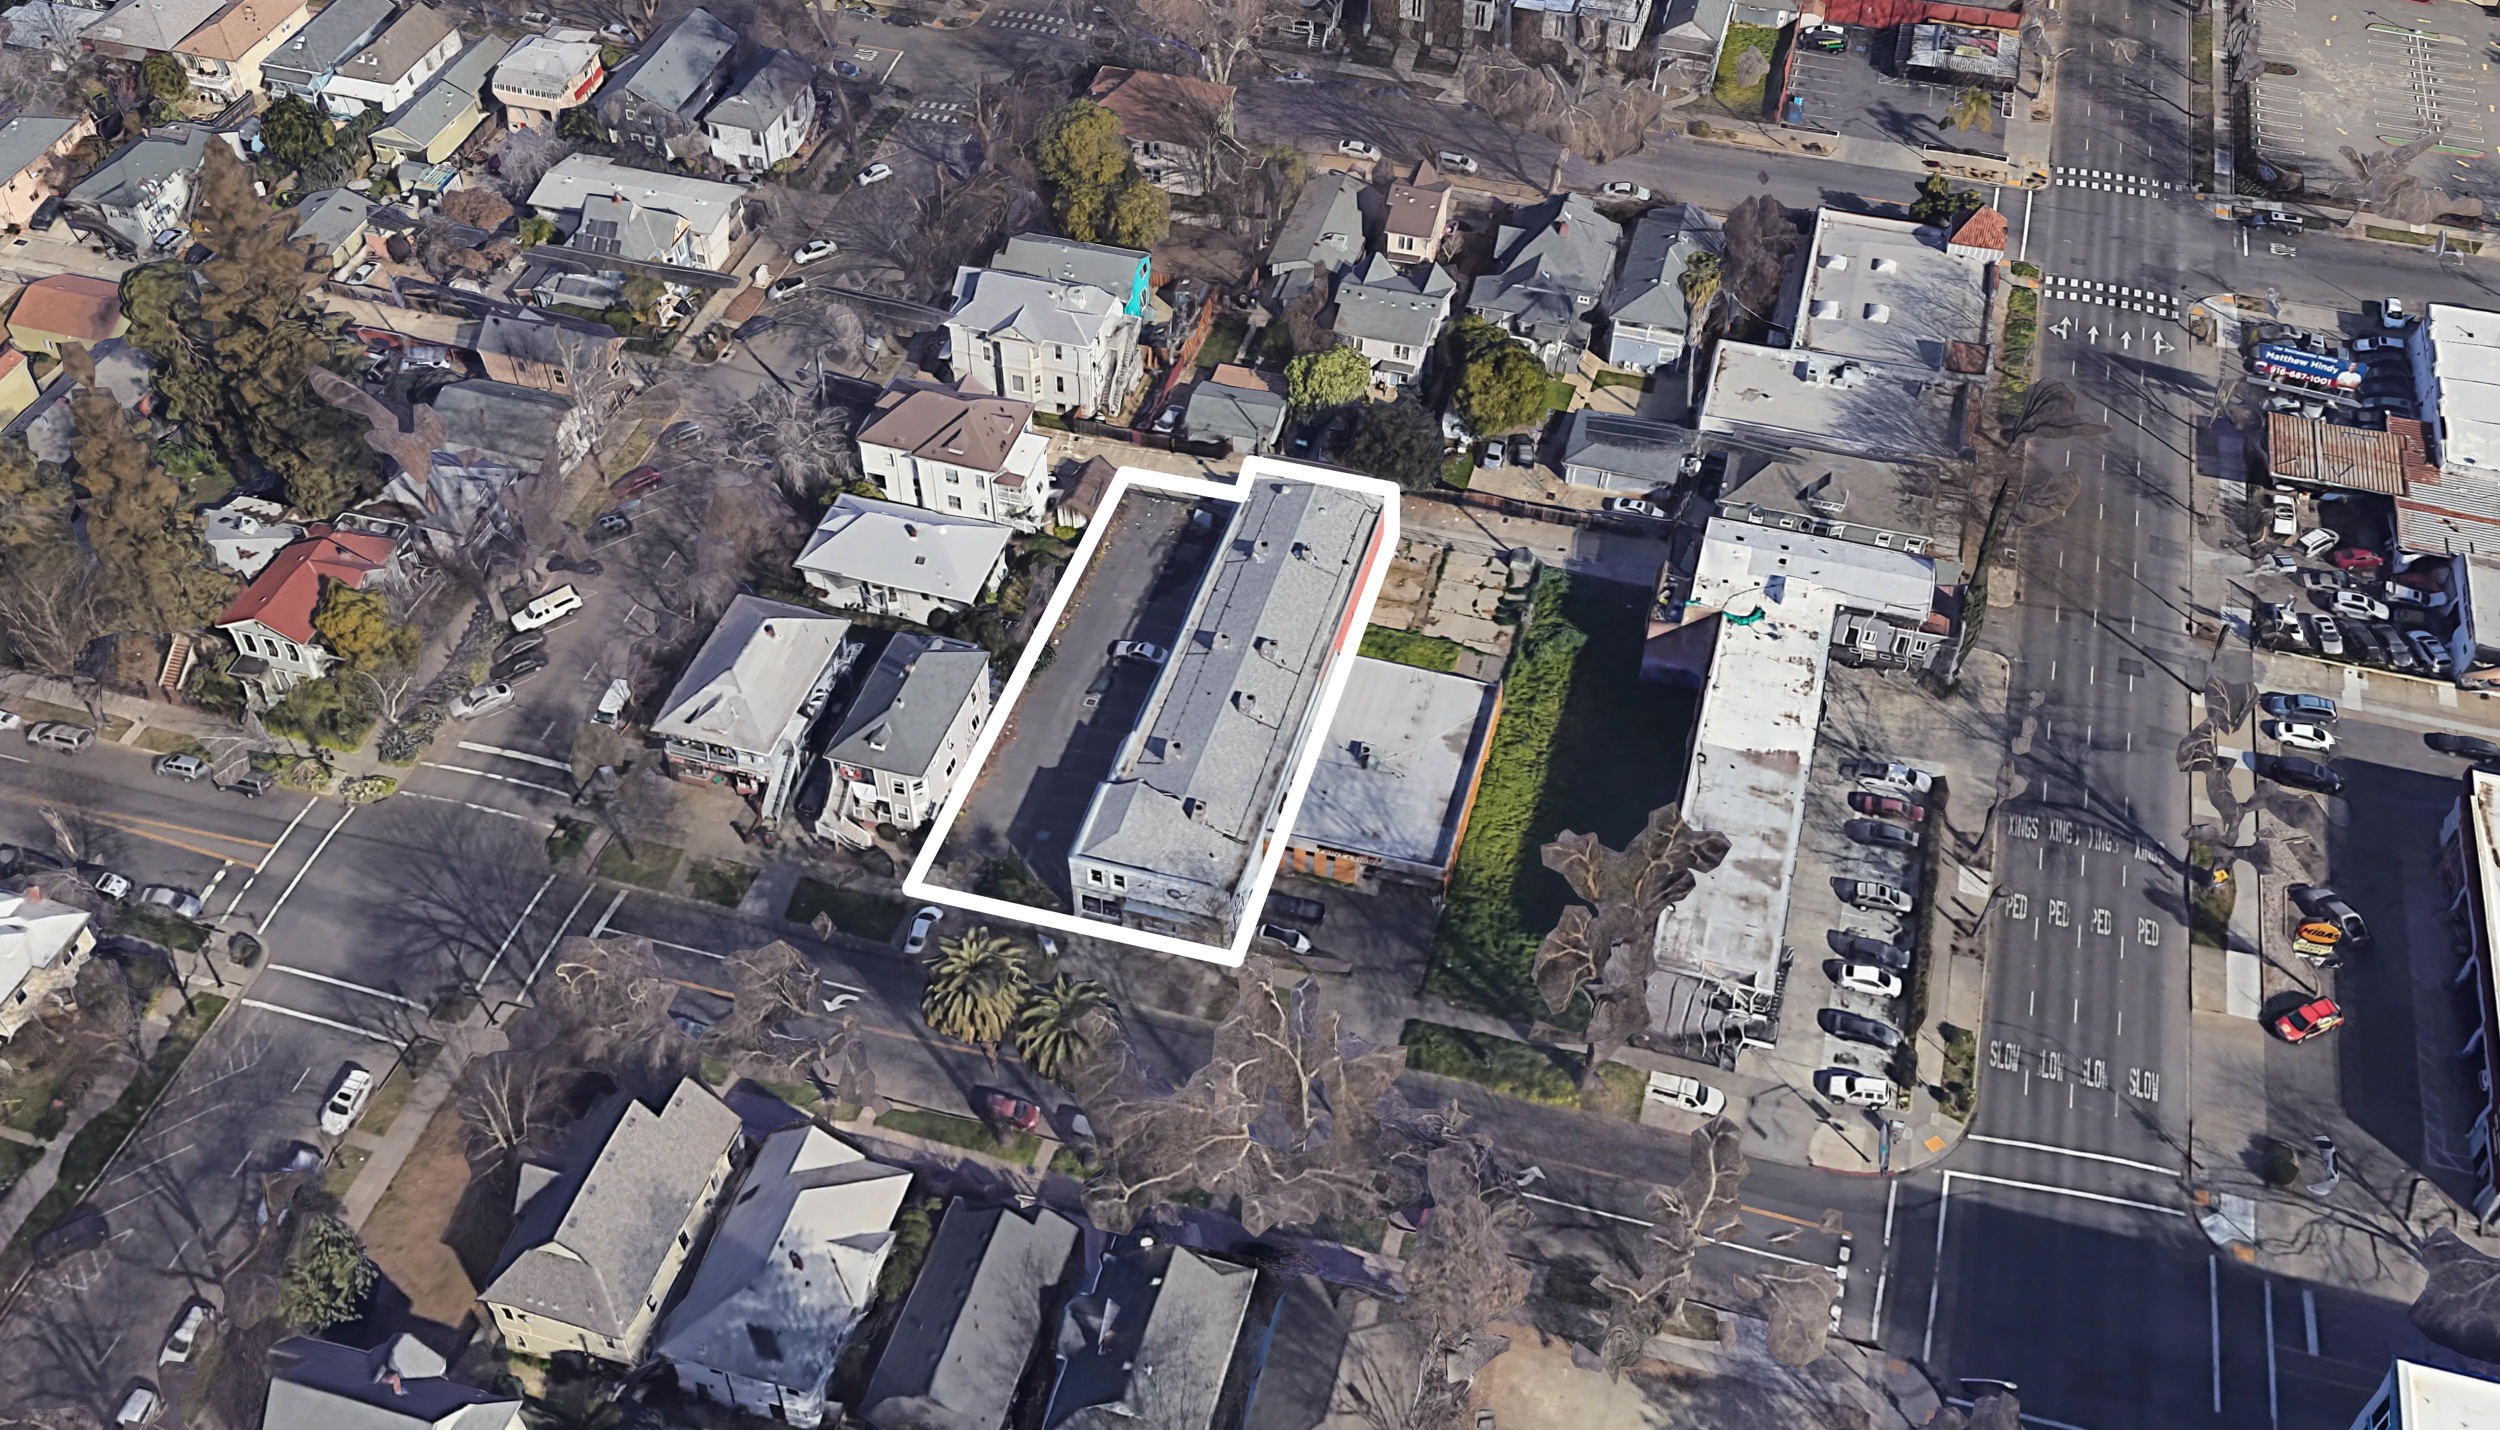 1517 E Street, image via Google Satellite